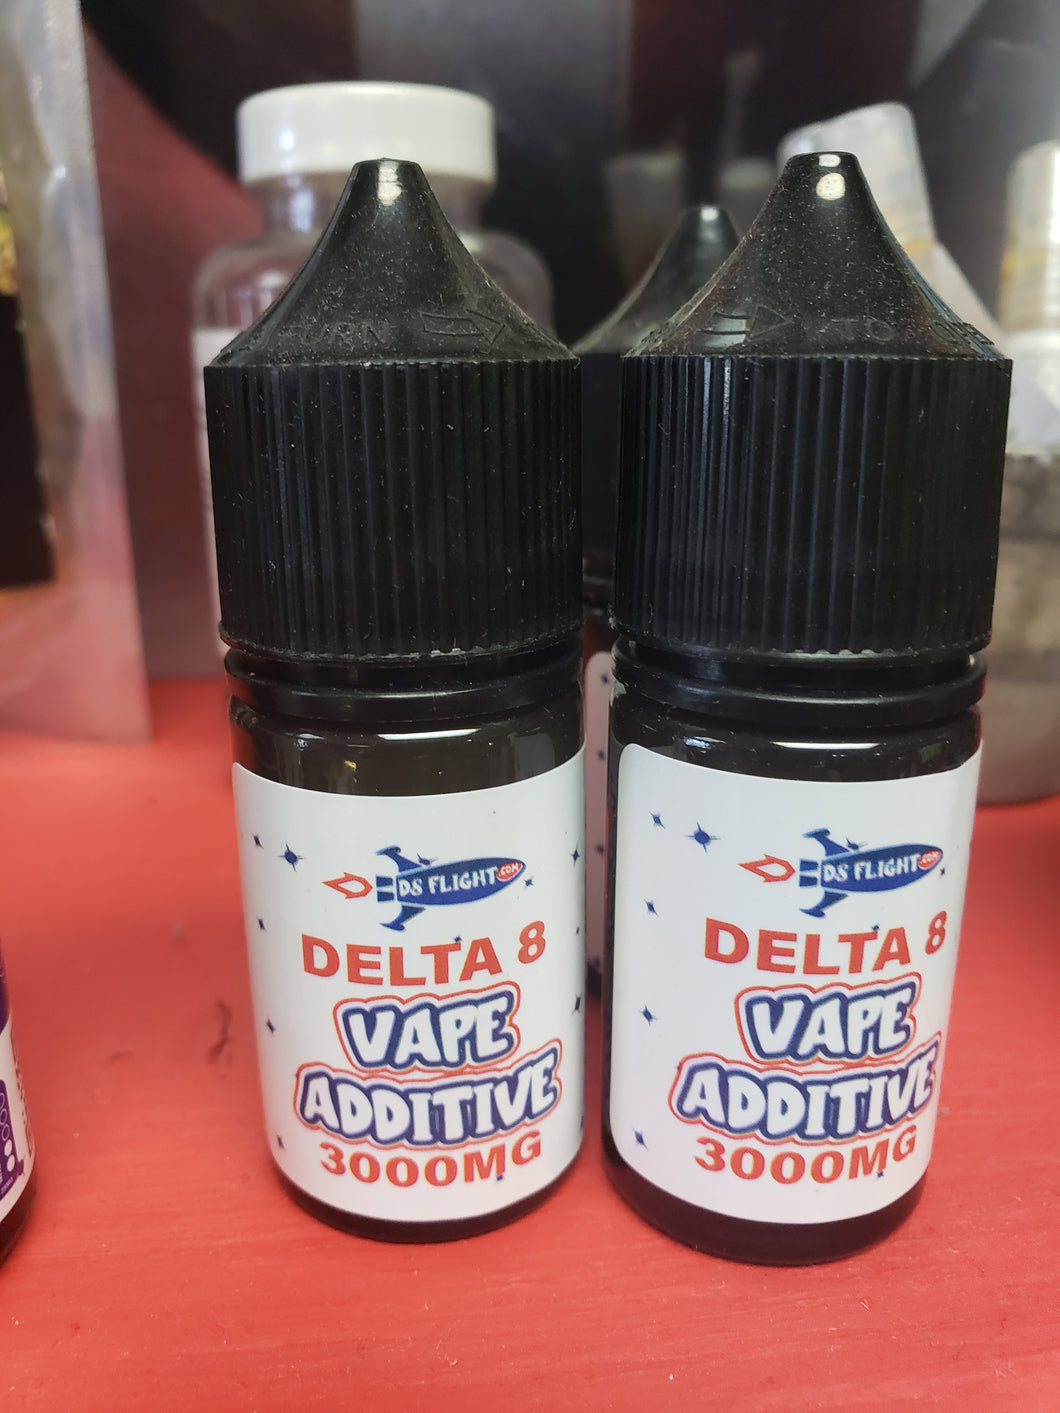 Delta 8 vape additive